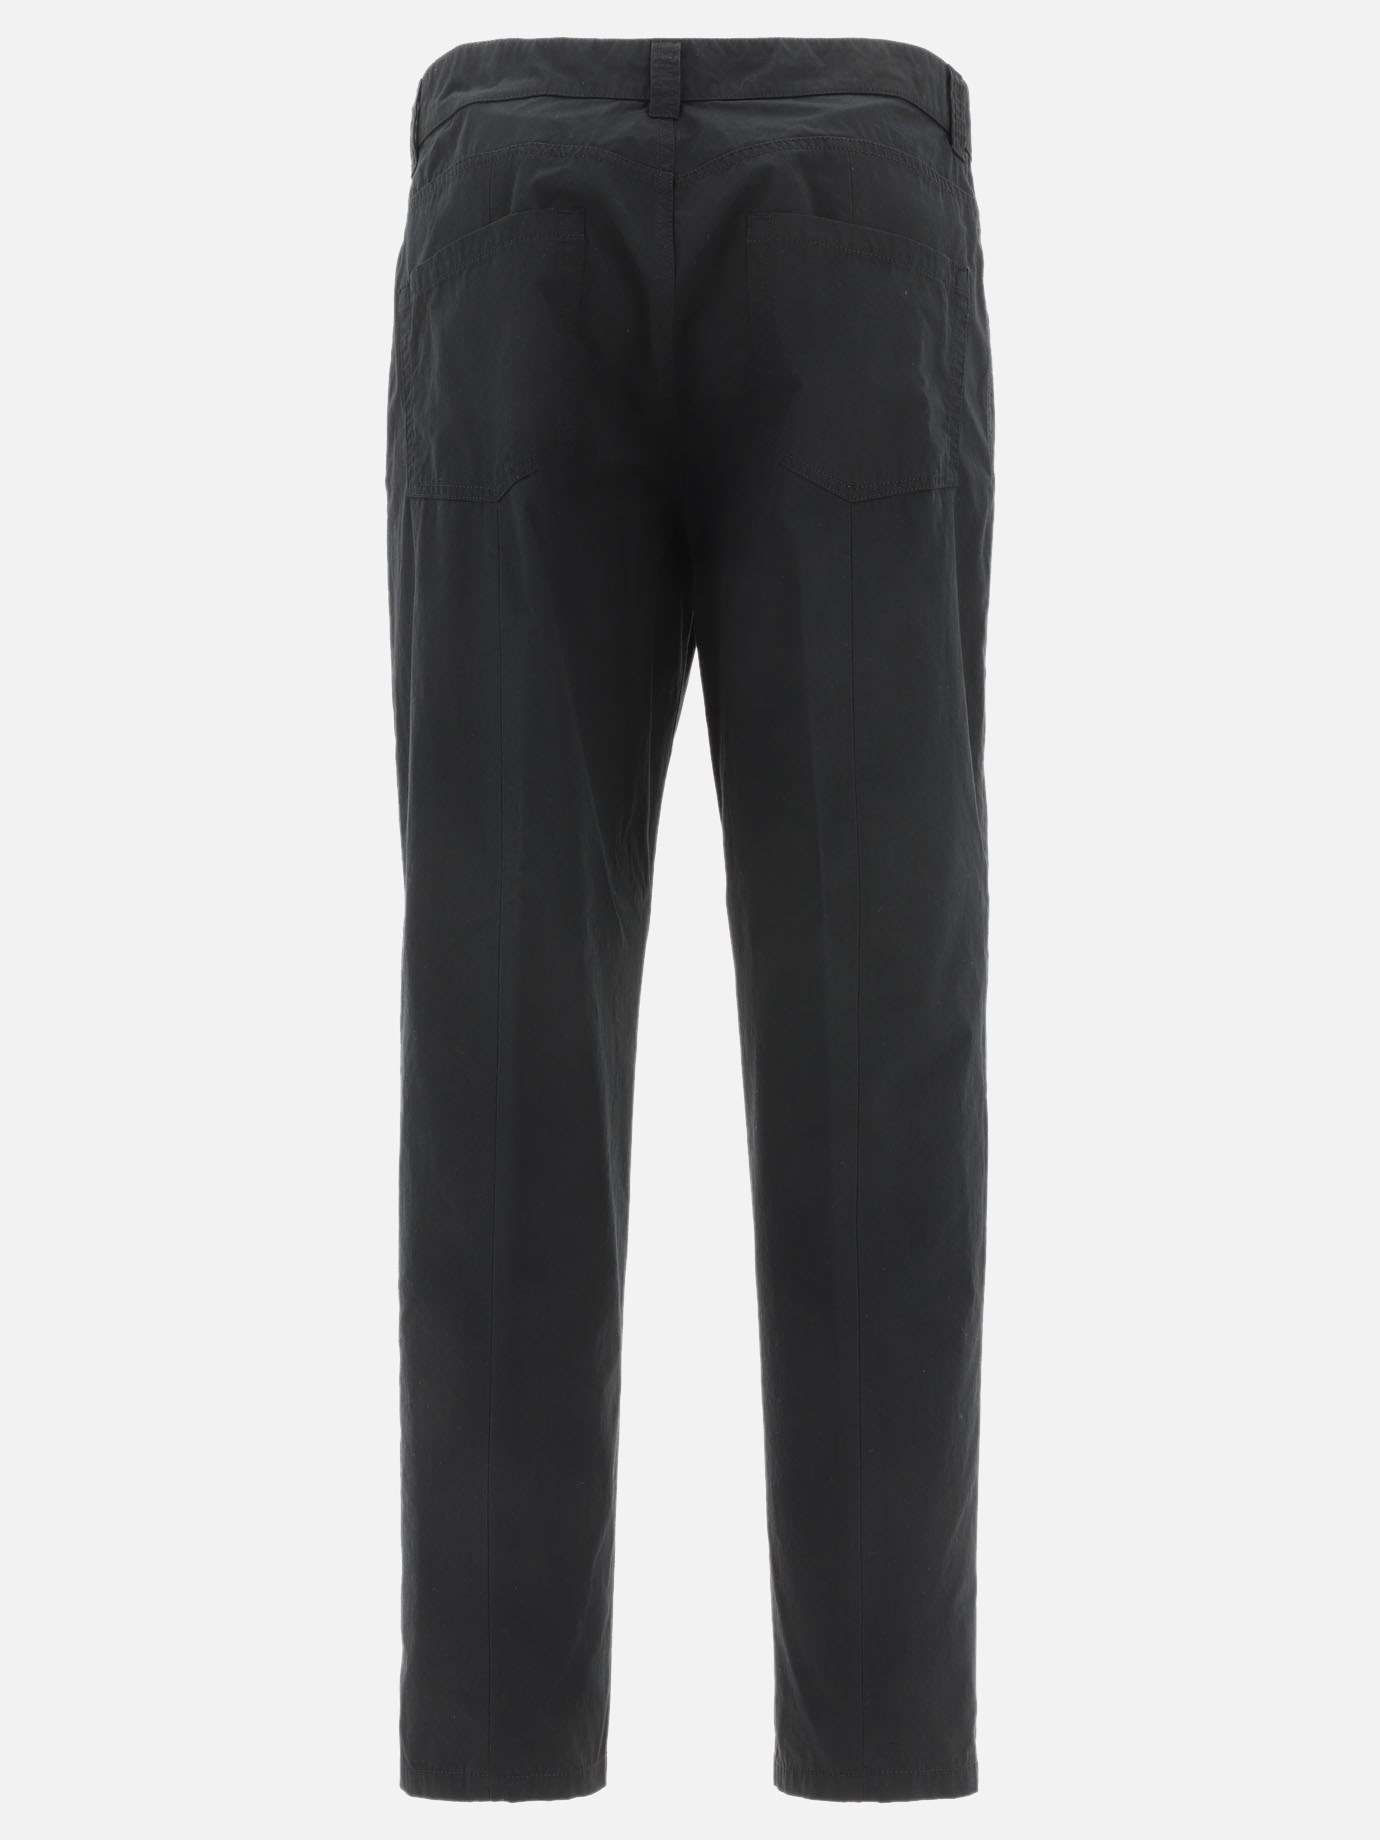 Pantaloni  Craig Green  by Moncler Genius